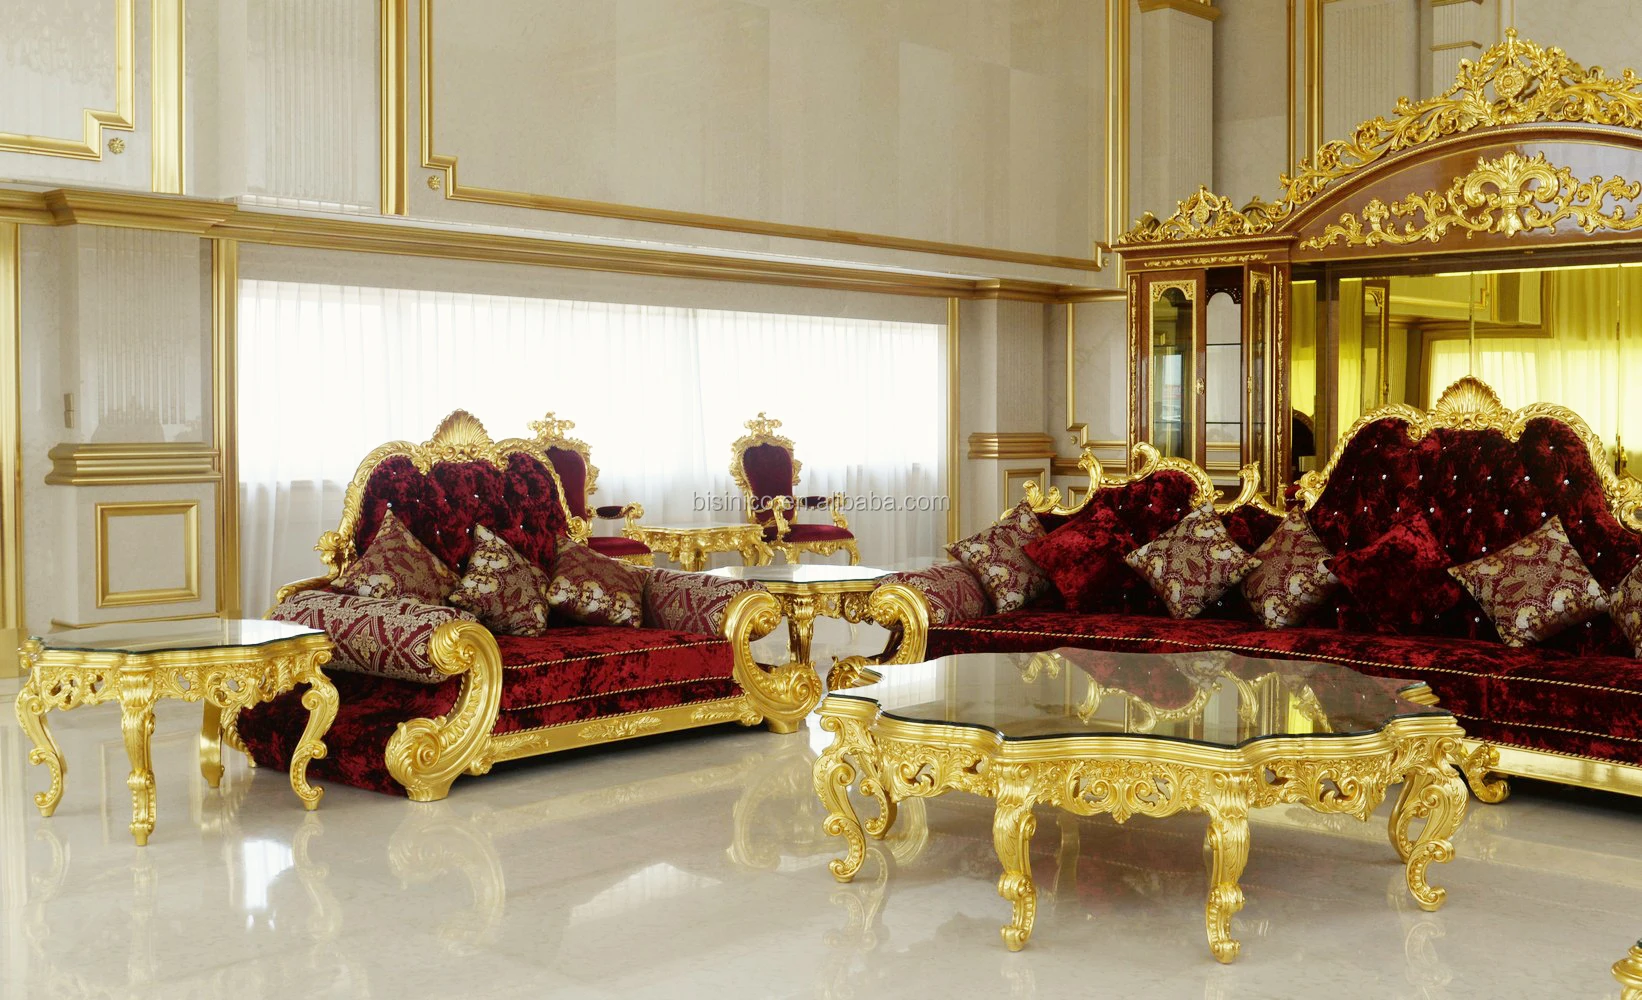 BAROCKSOFA ROT SALONSOFA BAROCK Sofa SITZBANK GOLD COUCH Palazzo24-de LOUISXV 